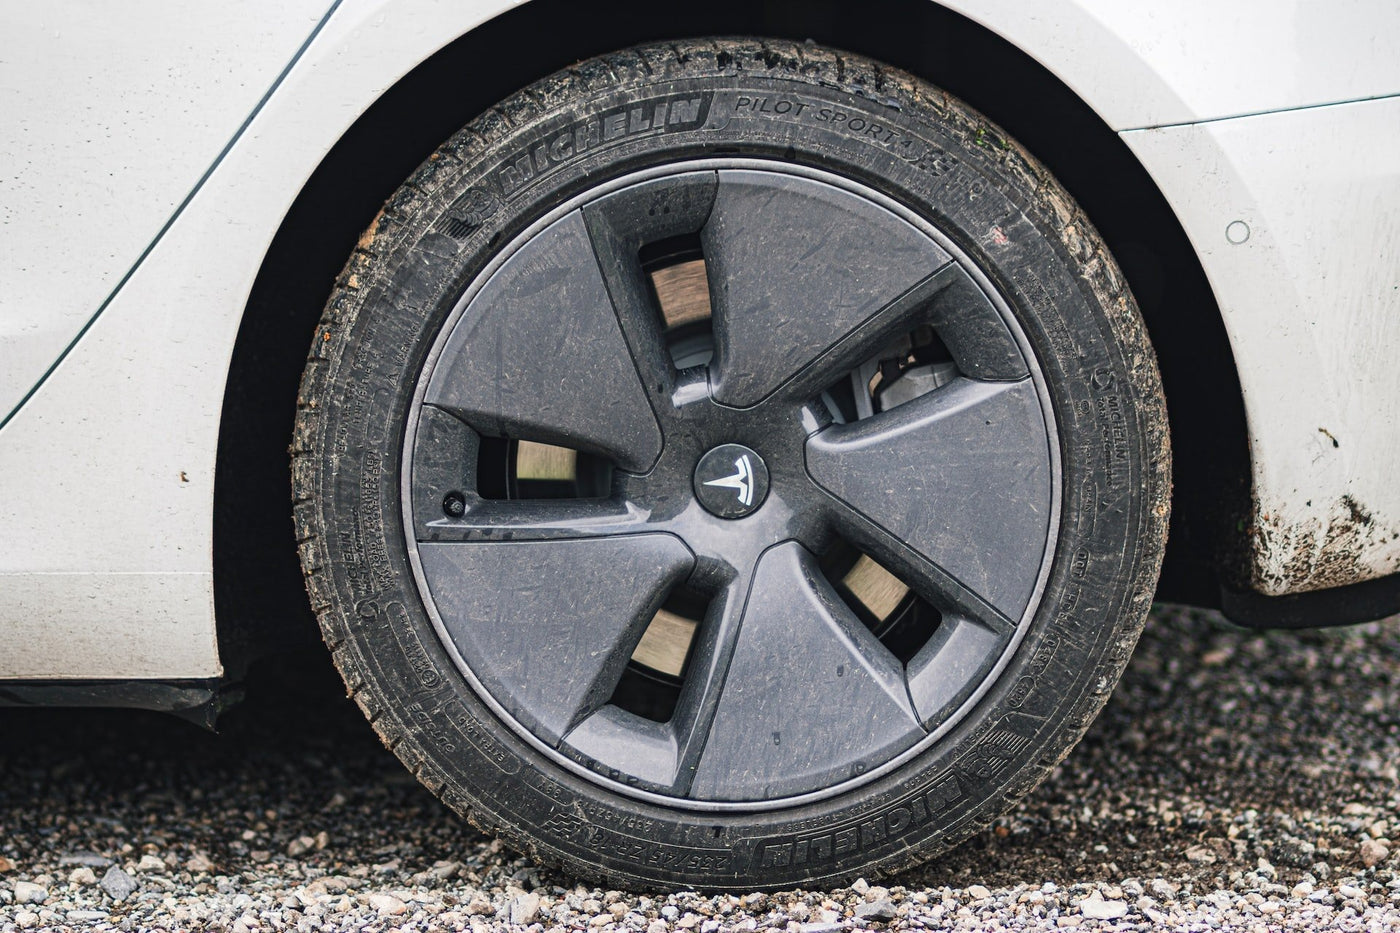 Do Teslas Have Tire Problems?